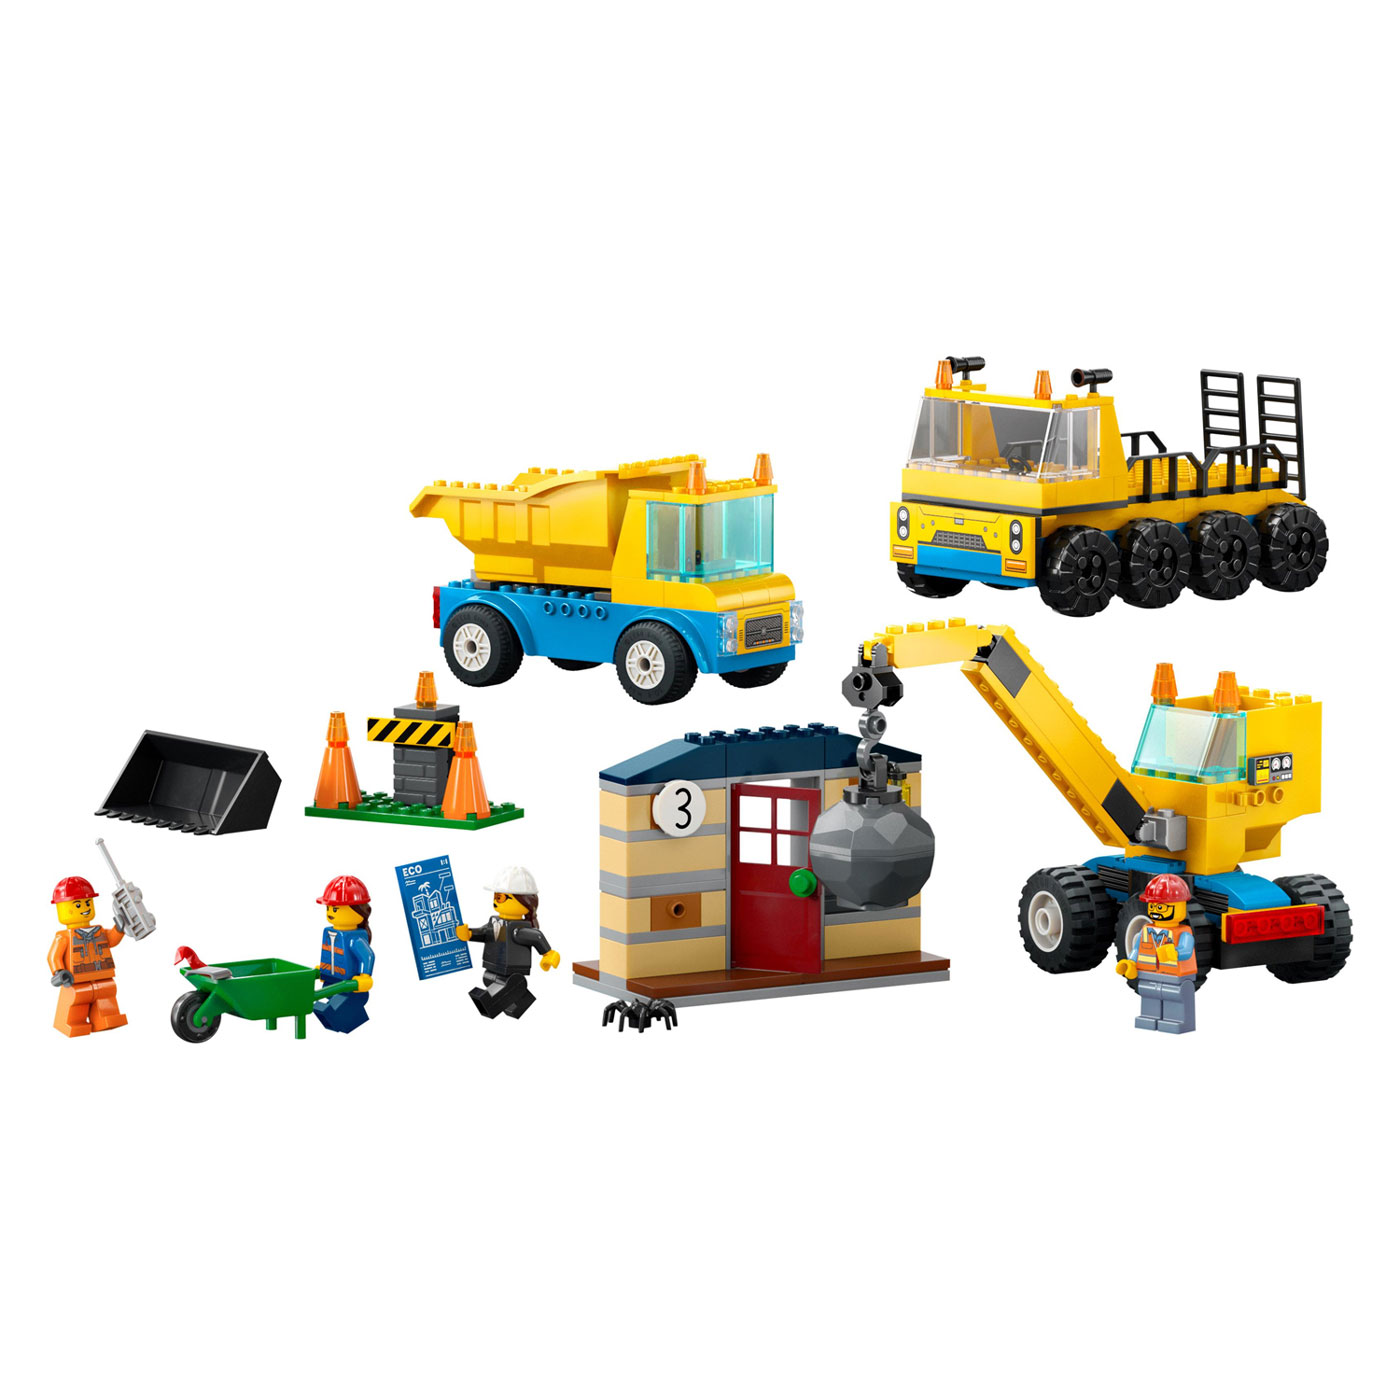 LEGO City Demolition Service Truck